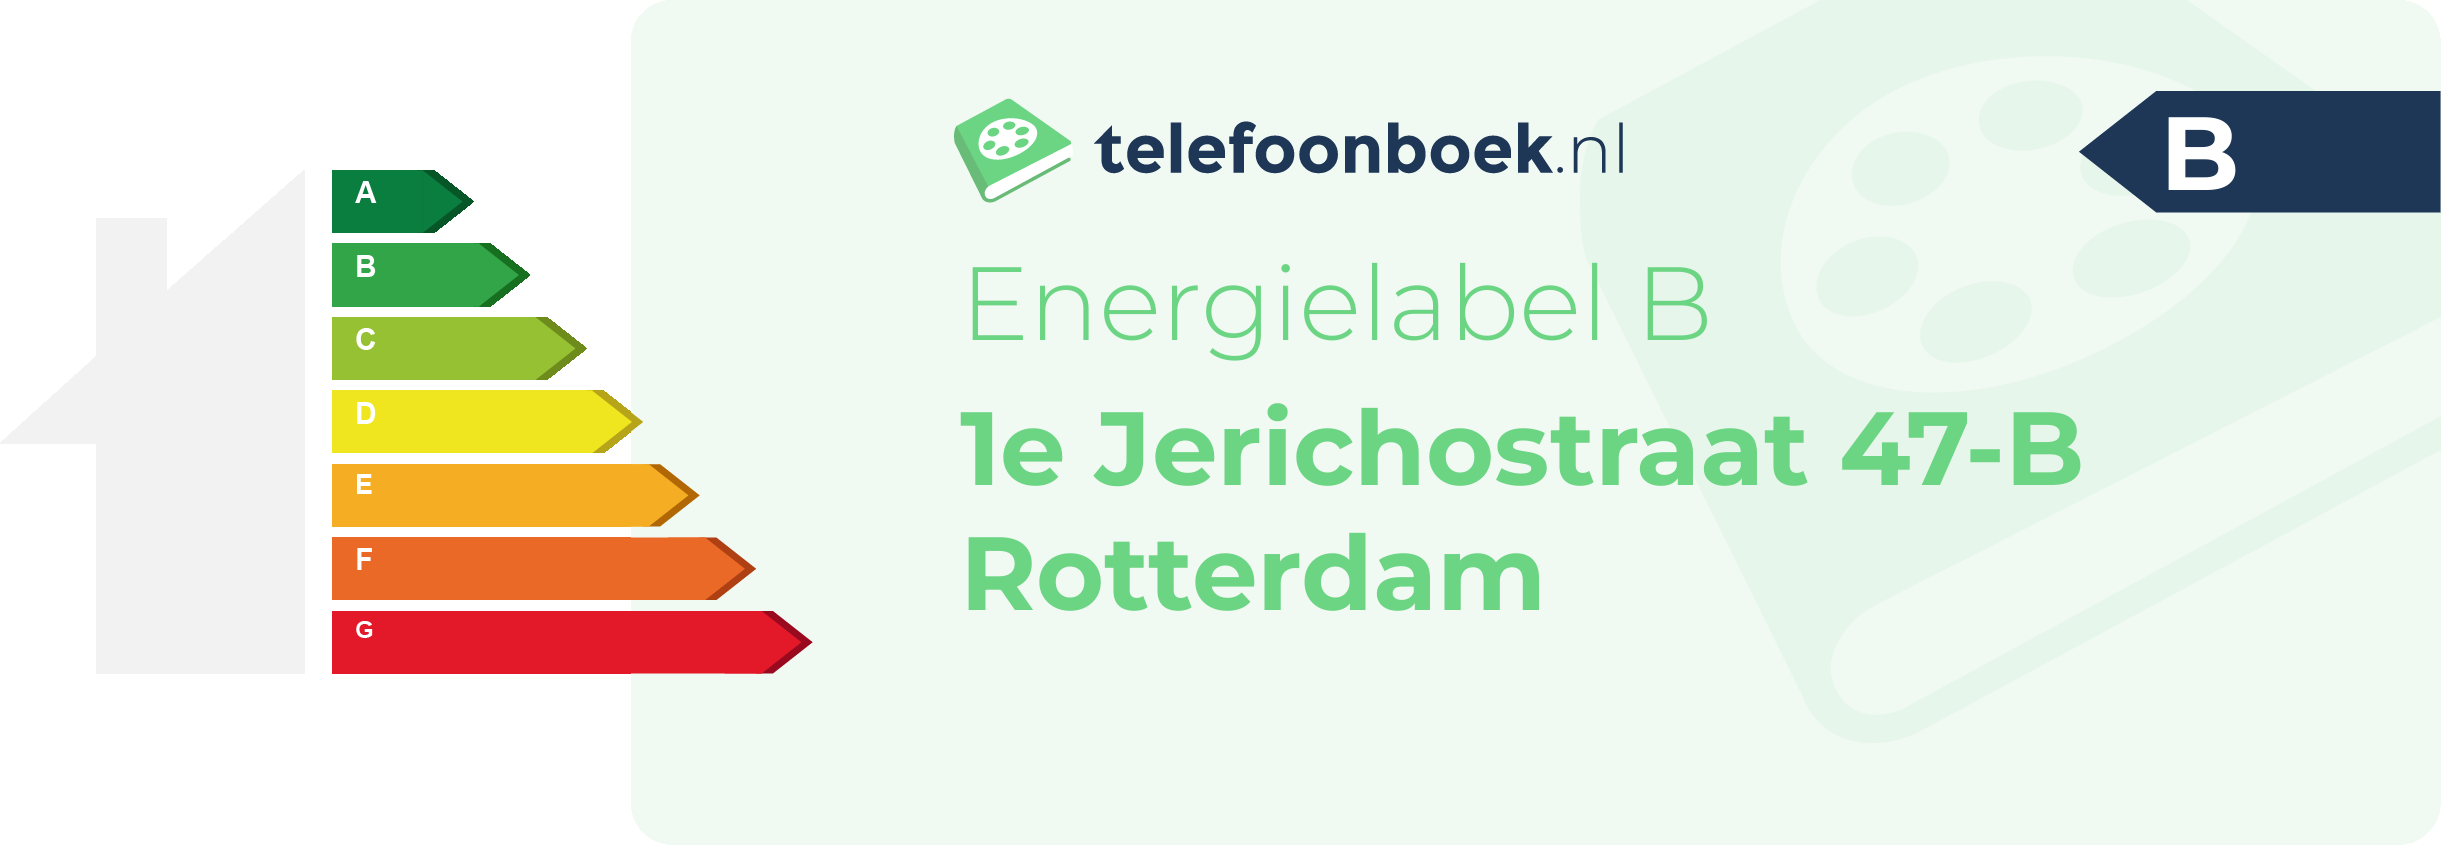 Energielabel 1e Jerichostraat 47-B Rotterdam